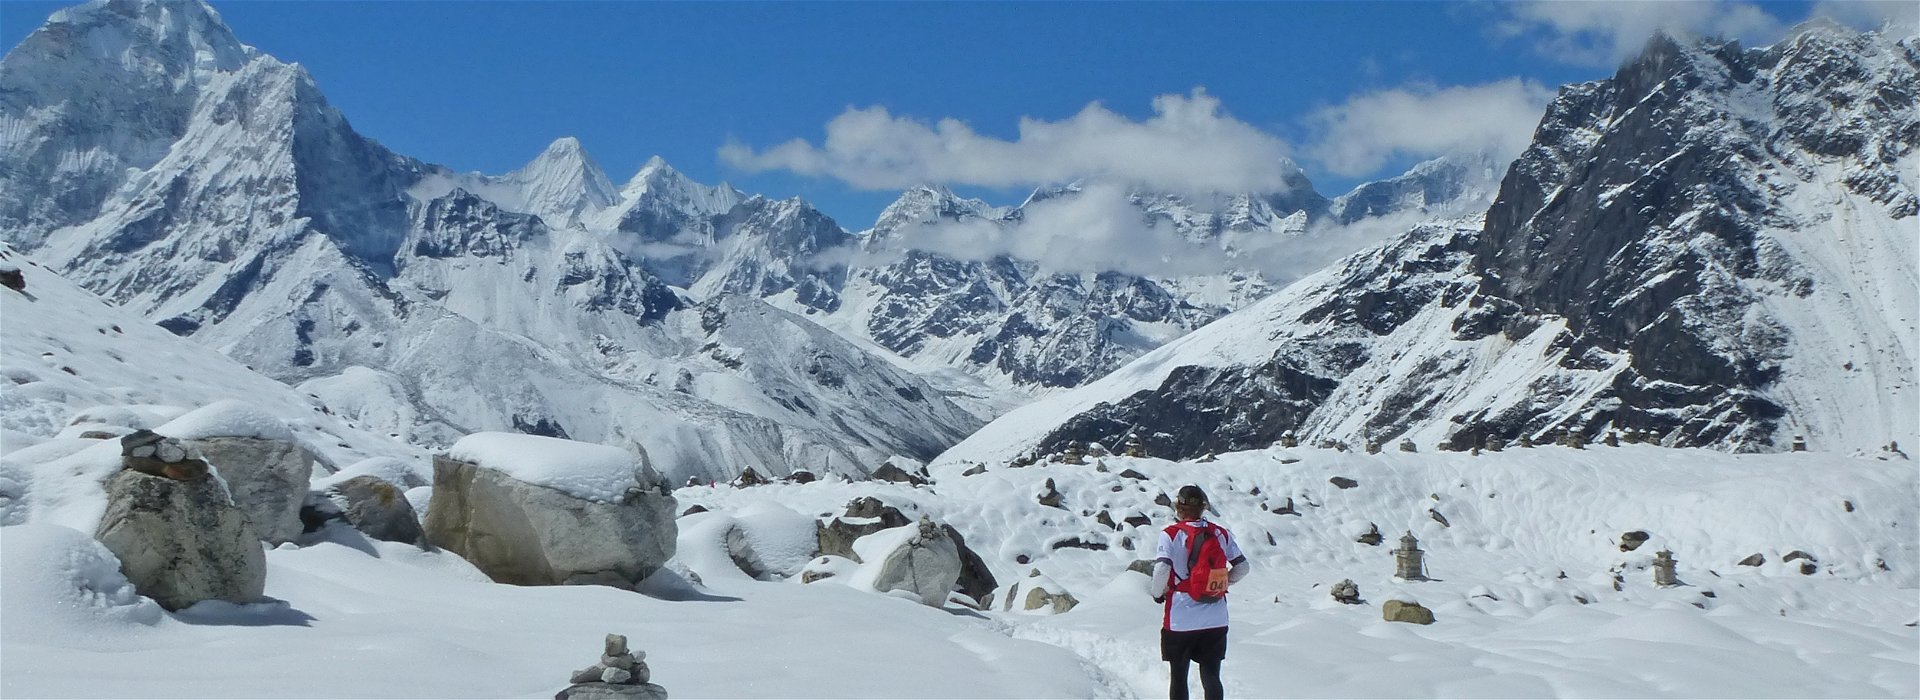 The Everest Marathon - Is it for Mortals?